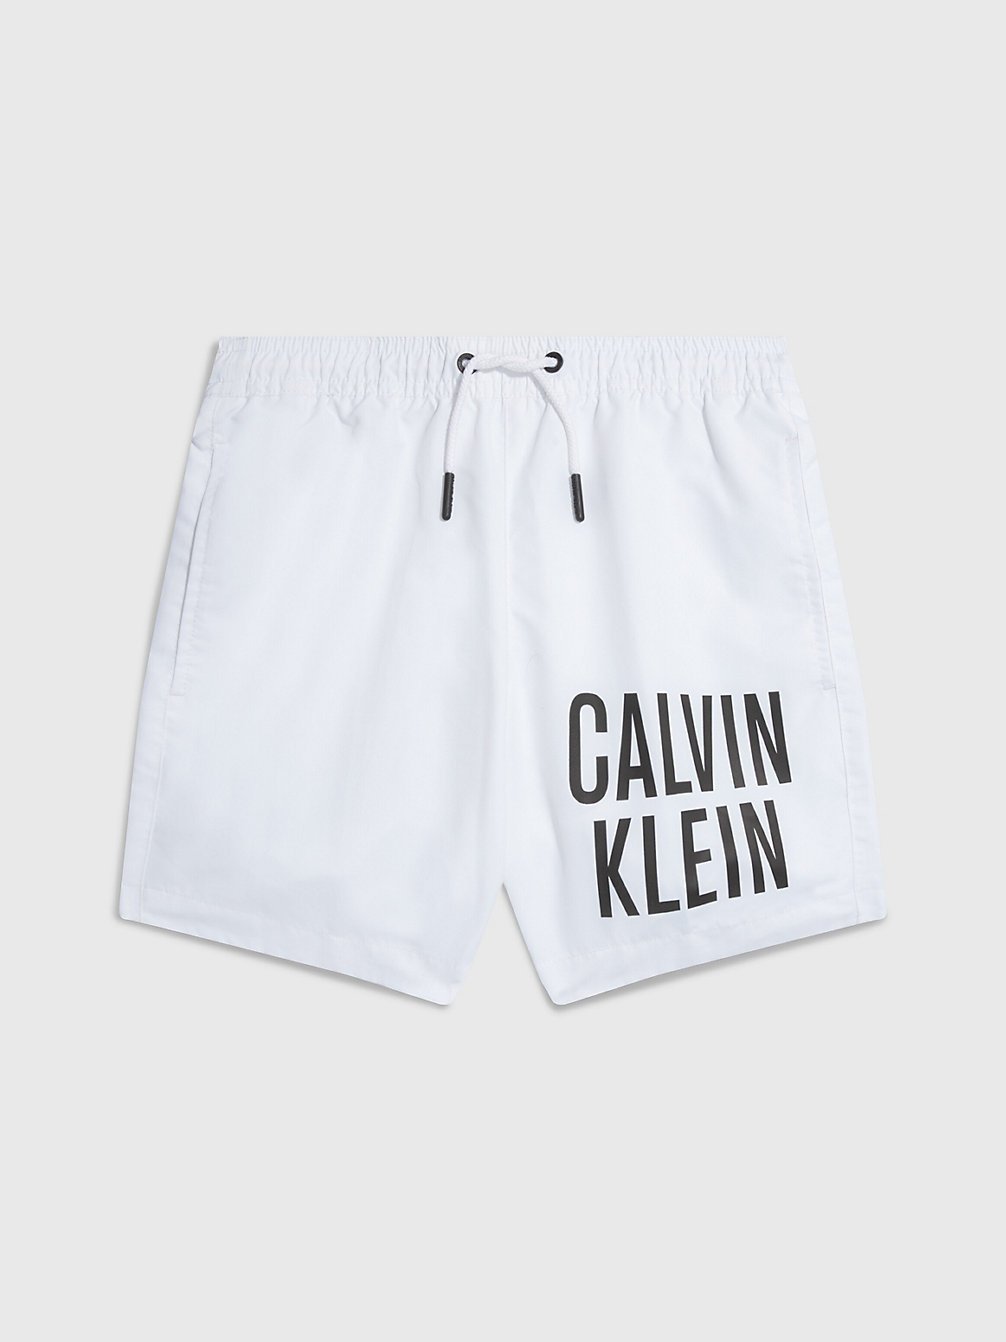 PVH CLASSIC WHITE > Zwemboxer Voor Jongens - Intense Power > undefined boys - Calvin Klein